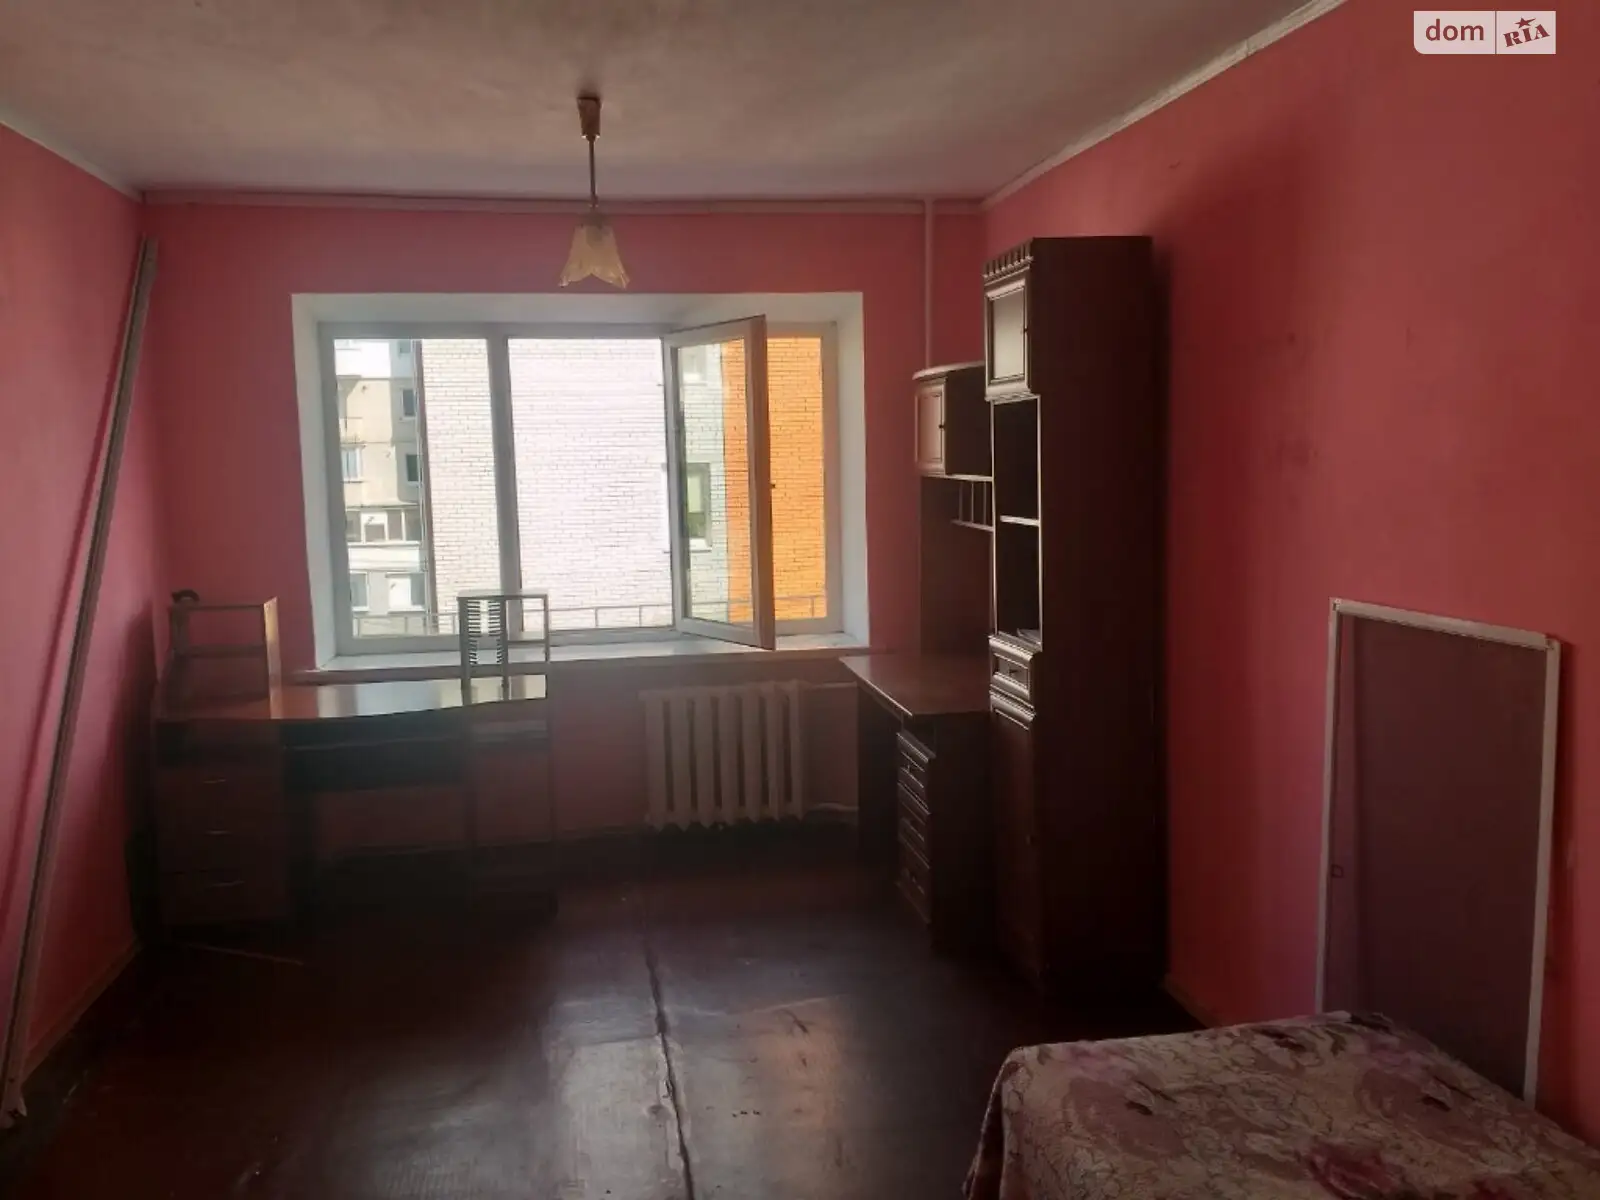 Продается комната 17.8 кв. м в Тернополе - фото 2